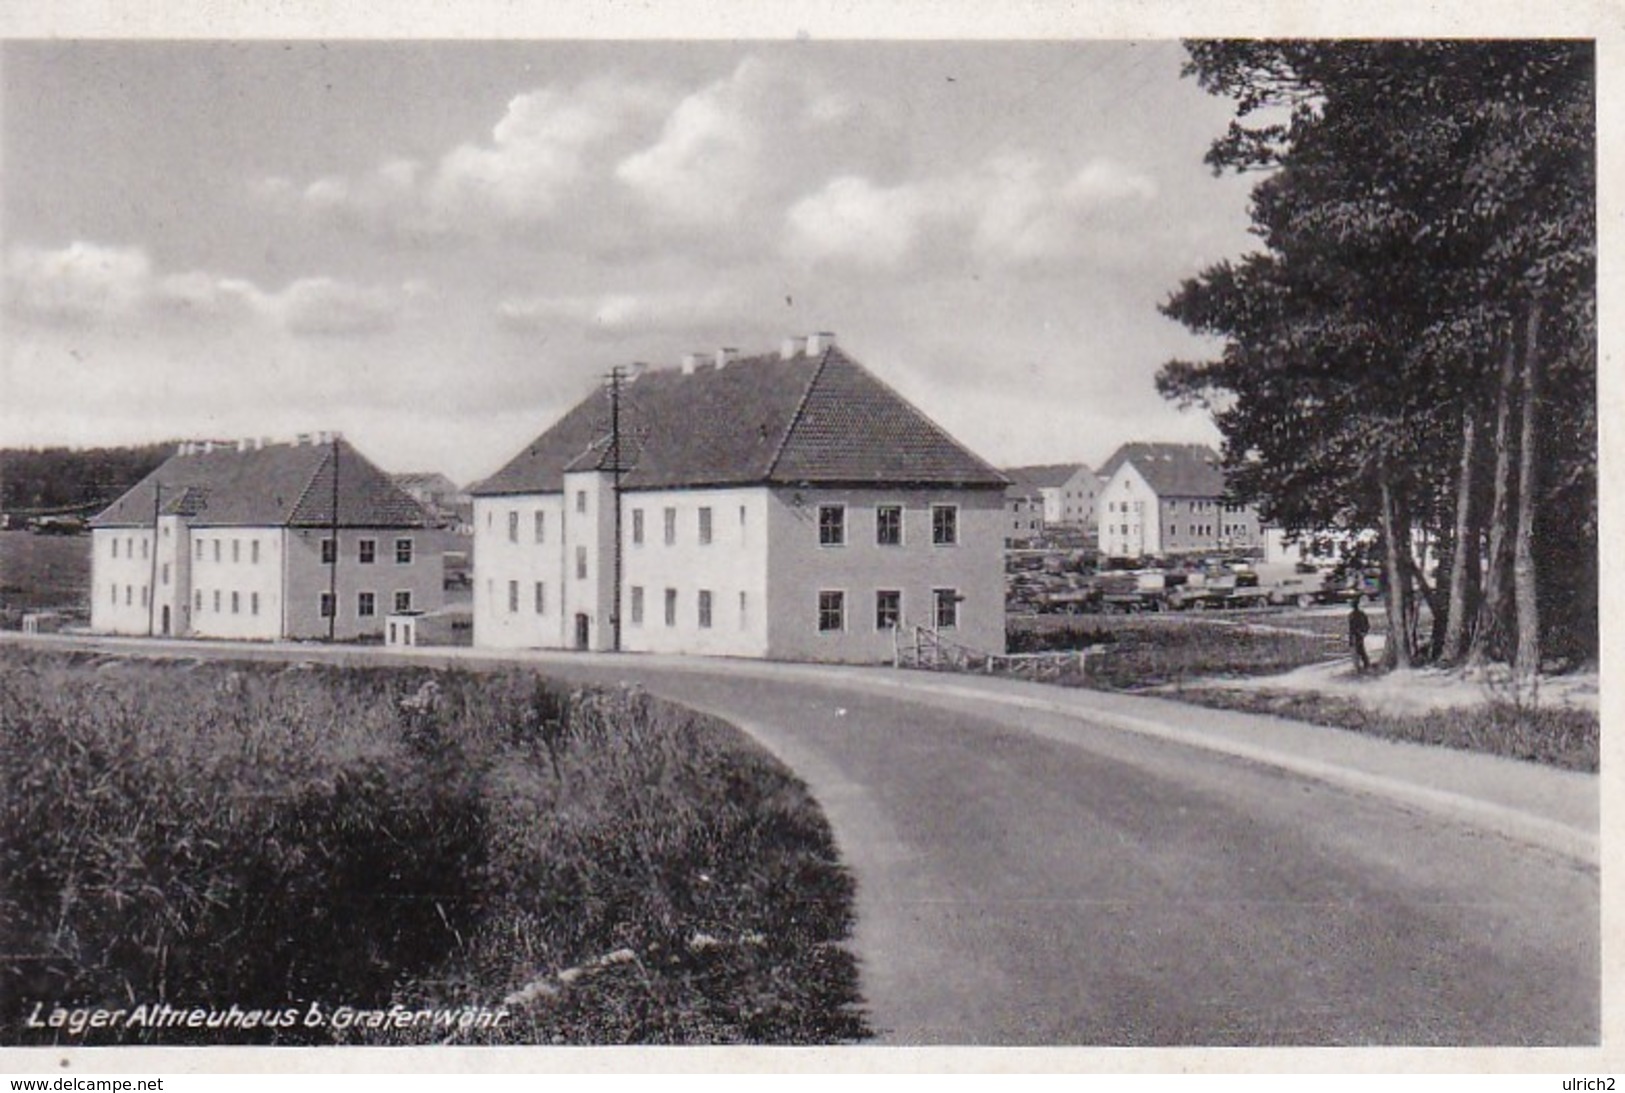 AK Lager Altneuhaus B. Grafenwöhr - 1942 (41114) - Grafenwöhr